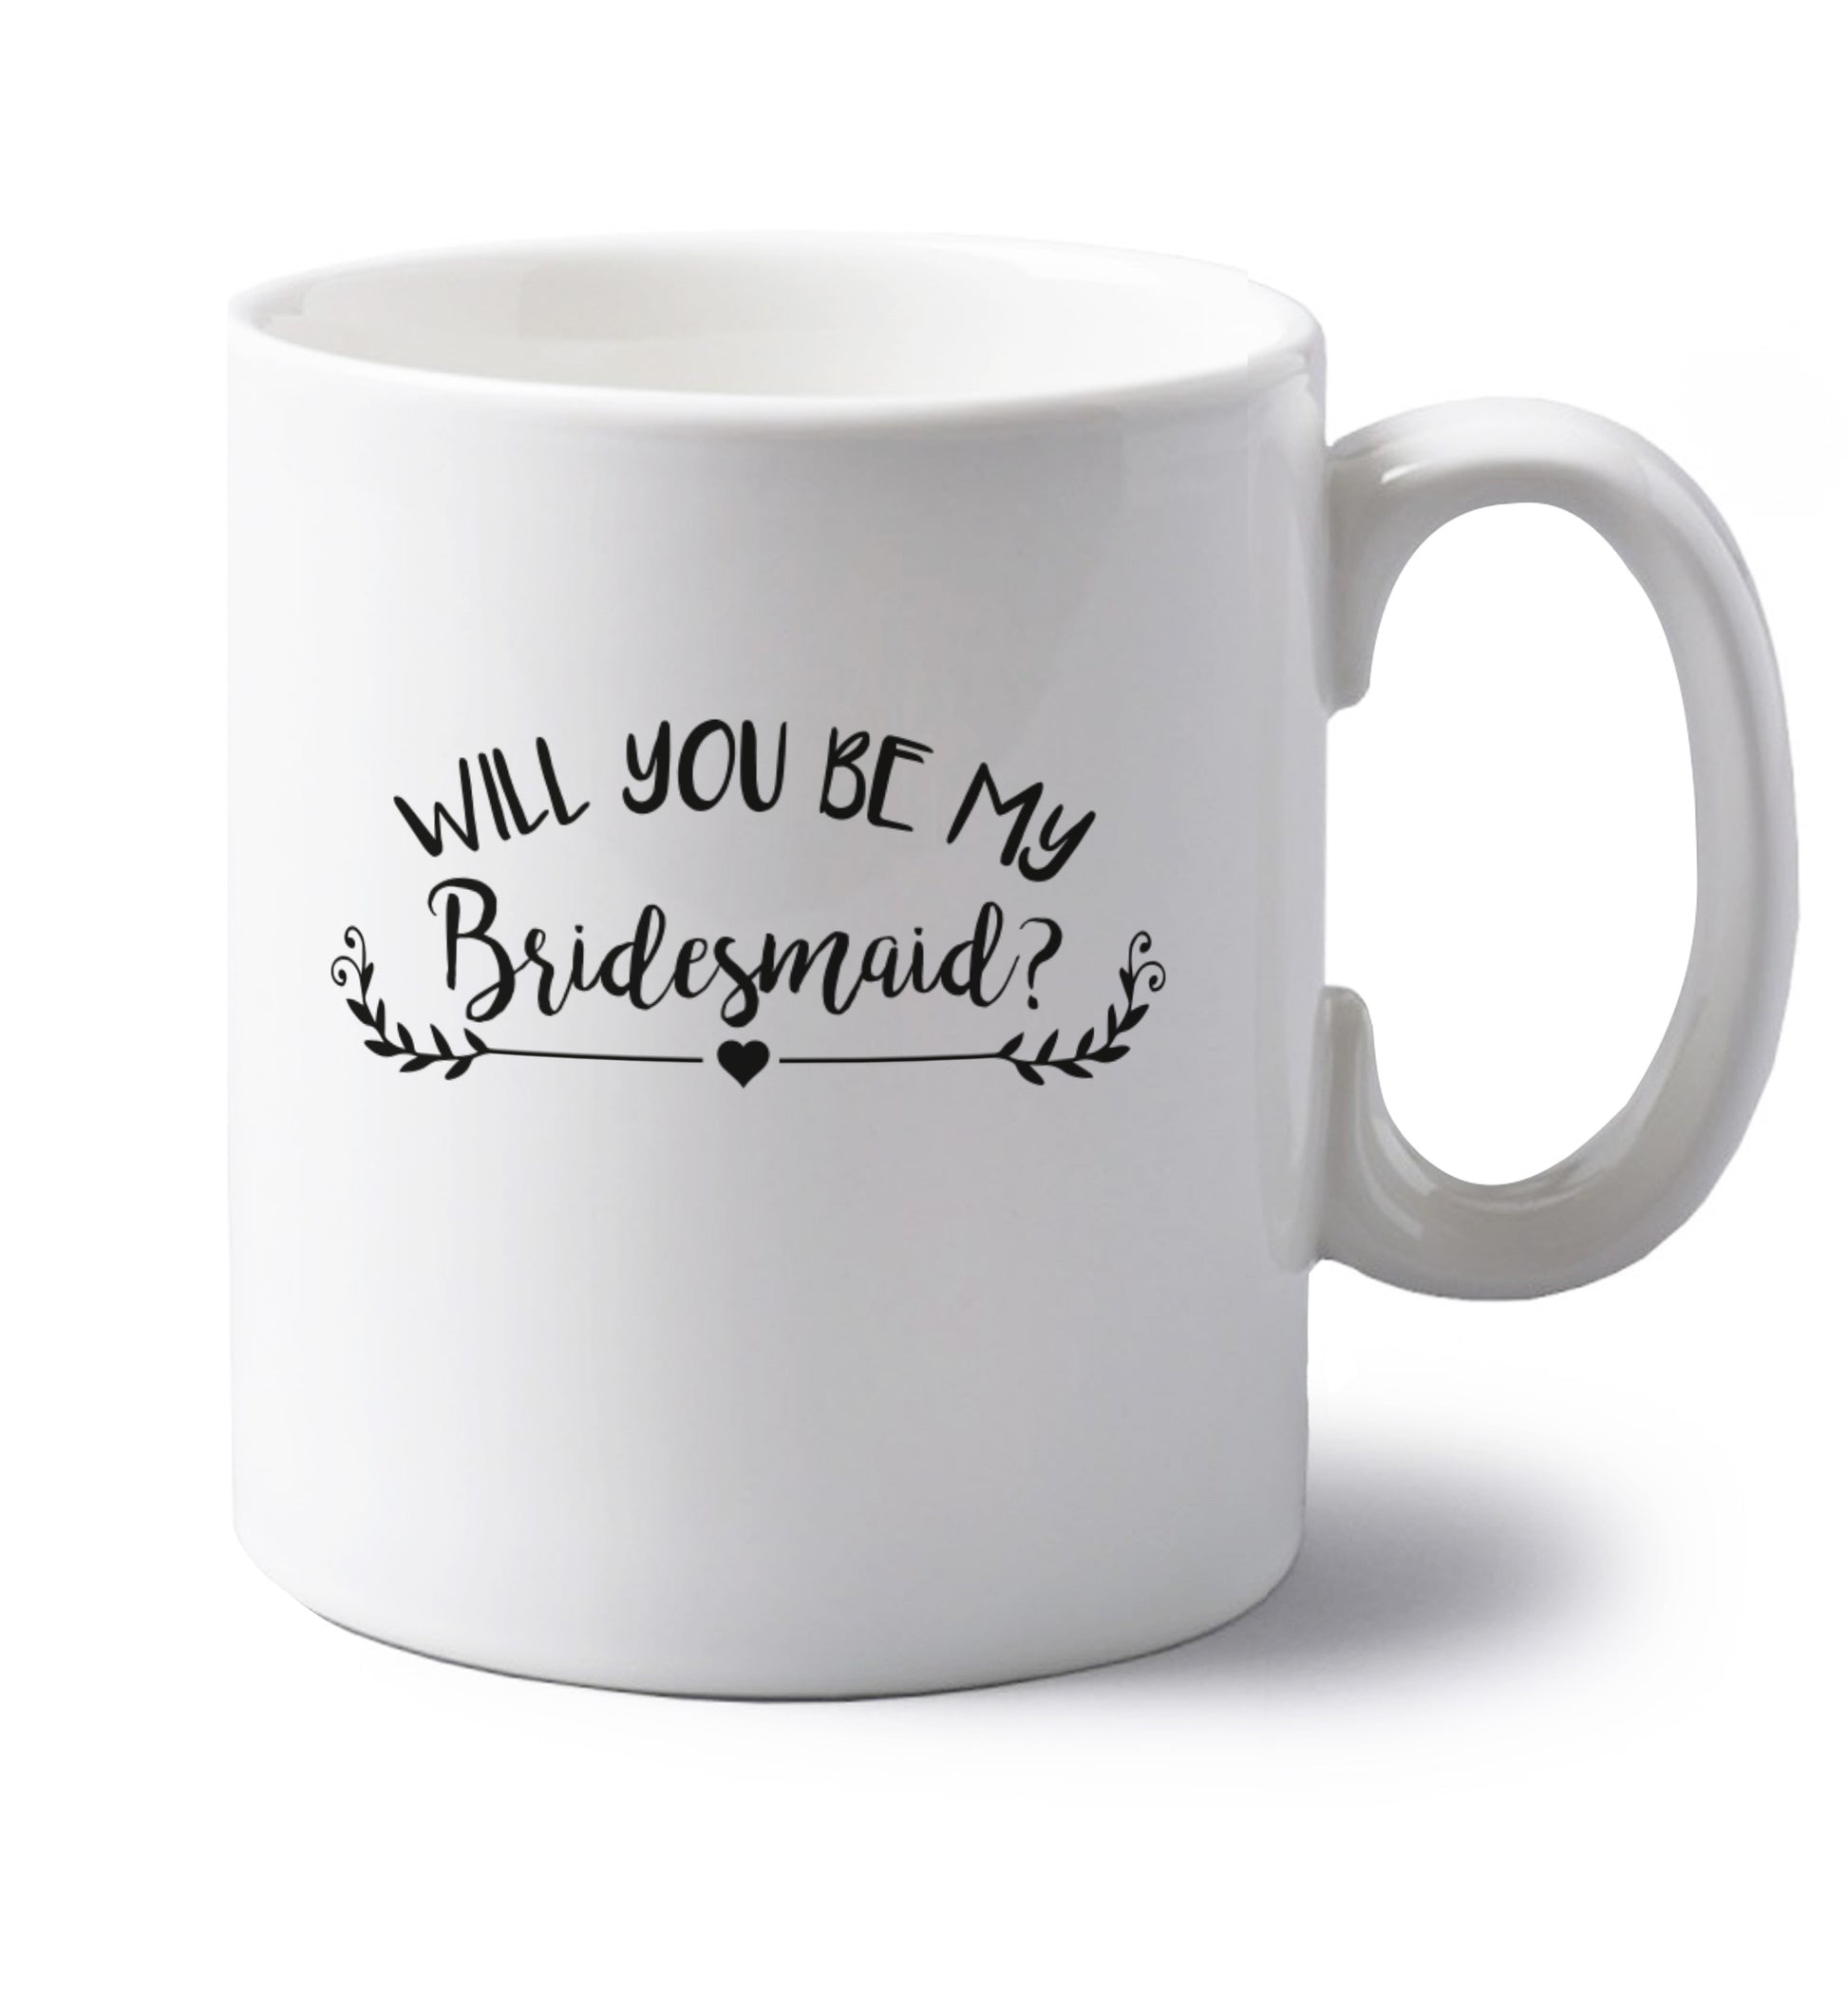 Will you be my bridesmaid? left handed white ceramic mug 